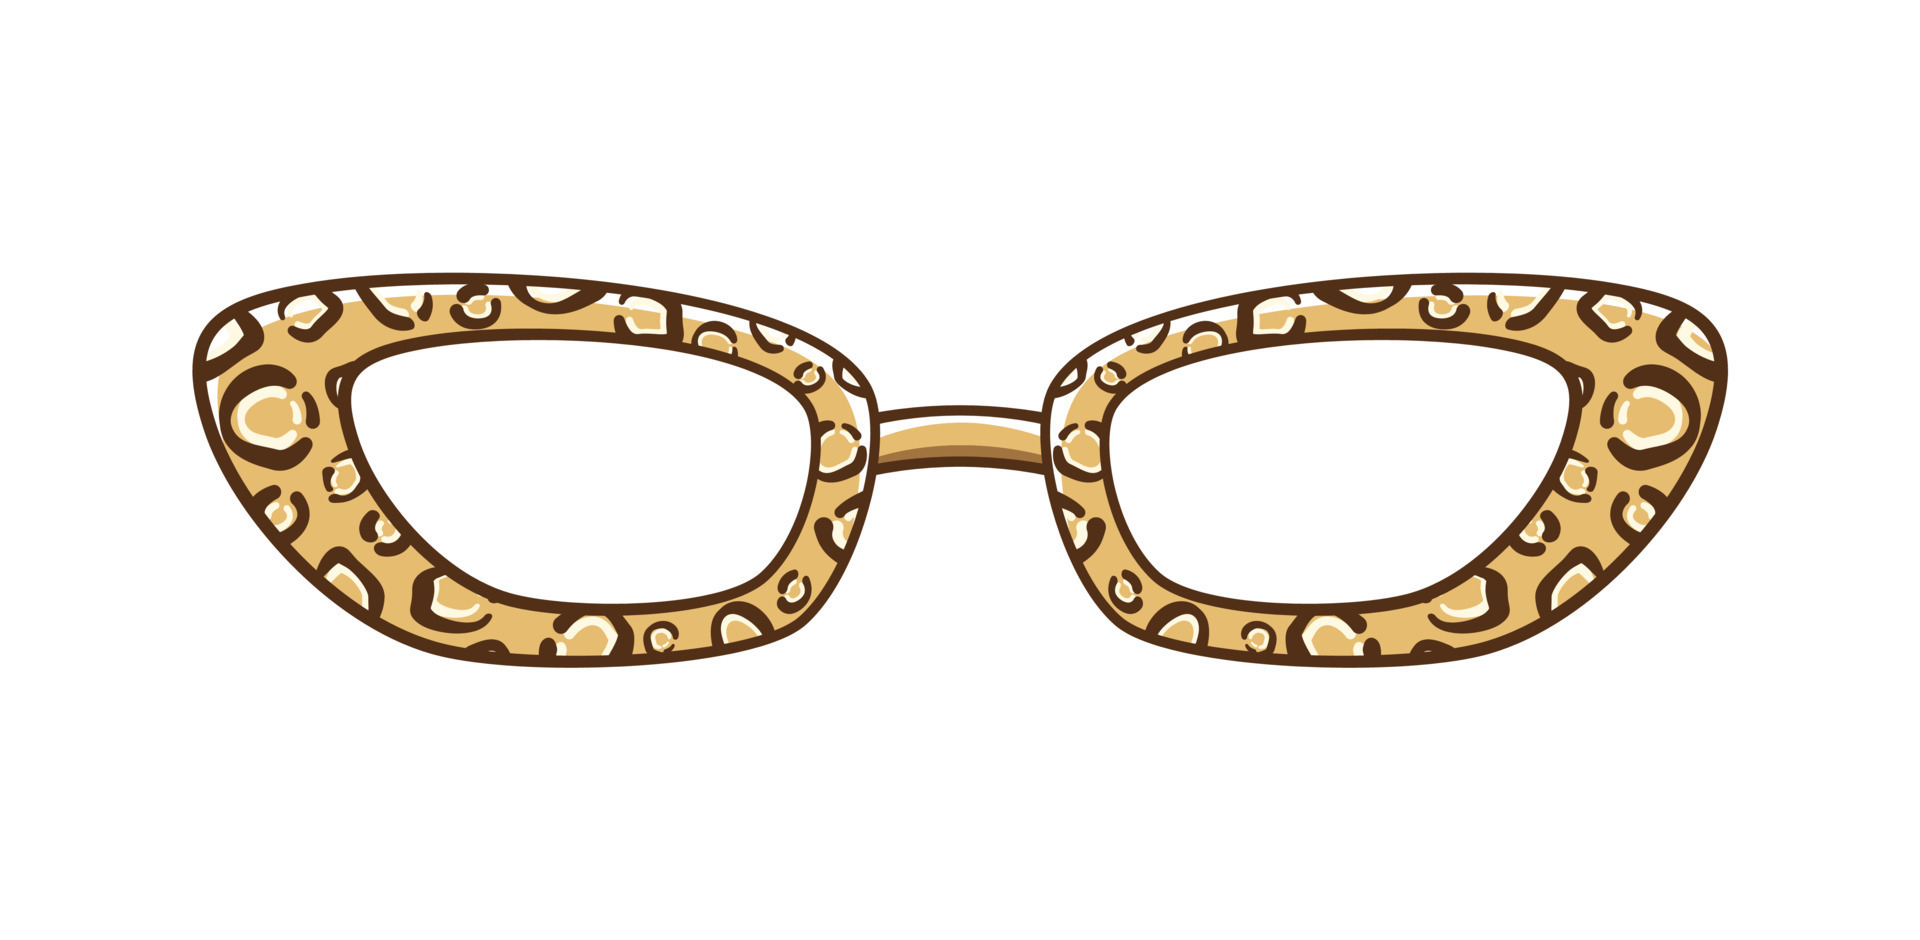 Leopard print eyeglasses frame clipart. Funky party glasses eyewear cartoon  vector illustration. 16461347 Vector Art at Vecteezy